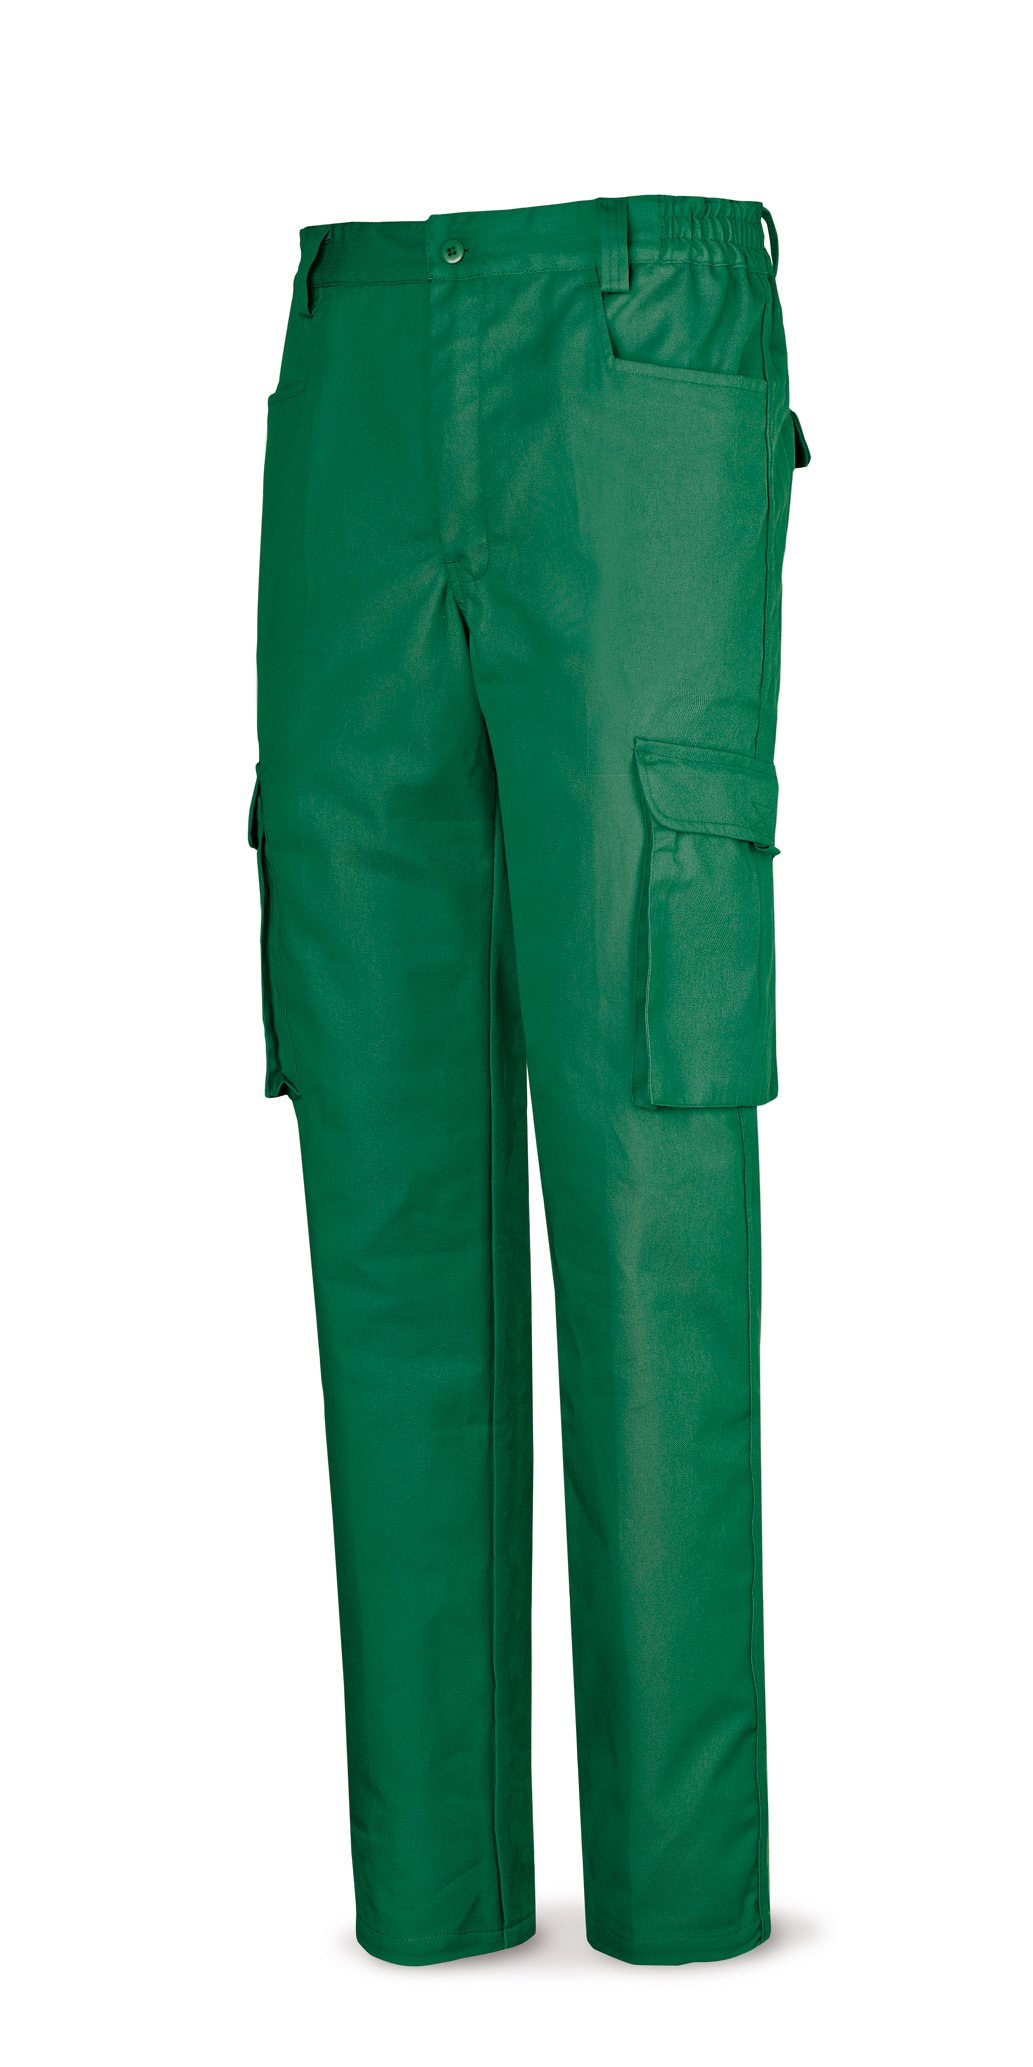 488-PV Top Vestuario Laboral Serie Top Pantalón verde poliester/algodón de 245 g. Multibolsillo